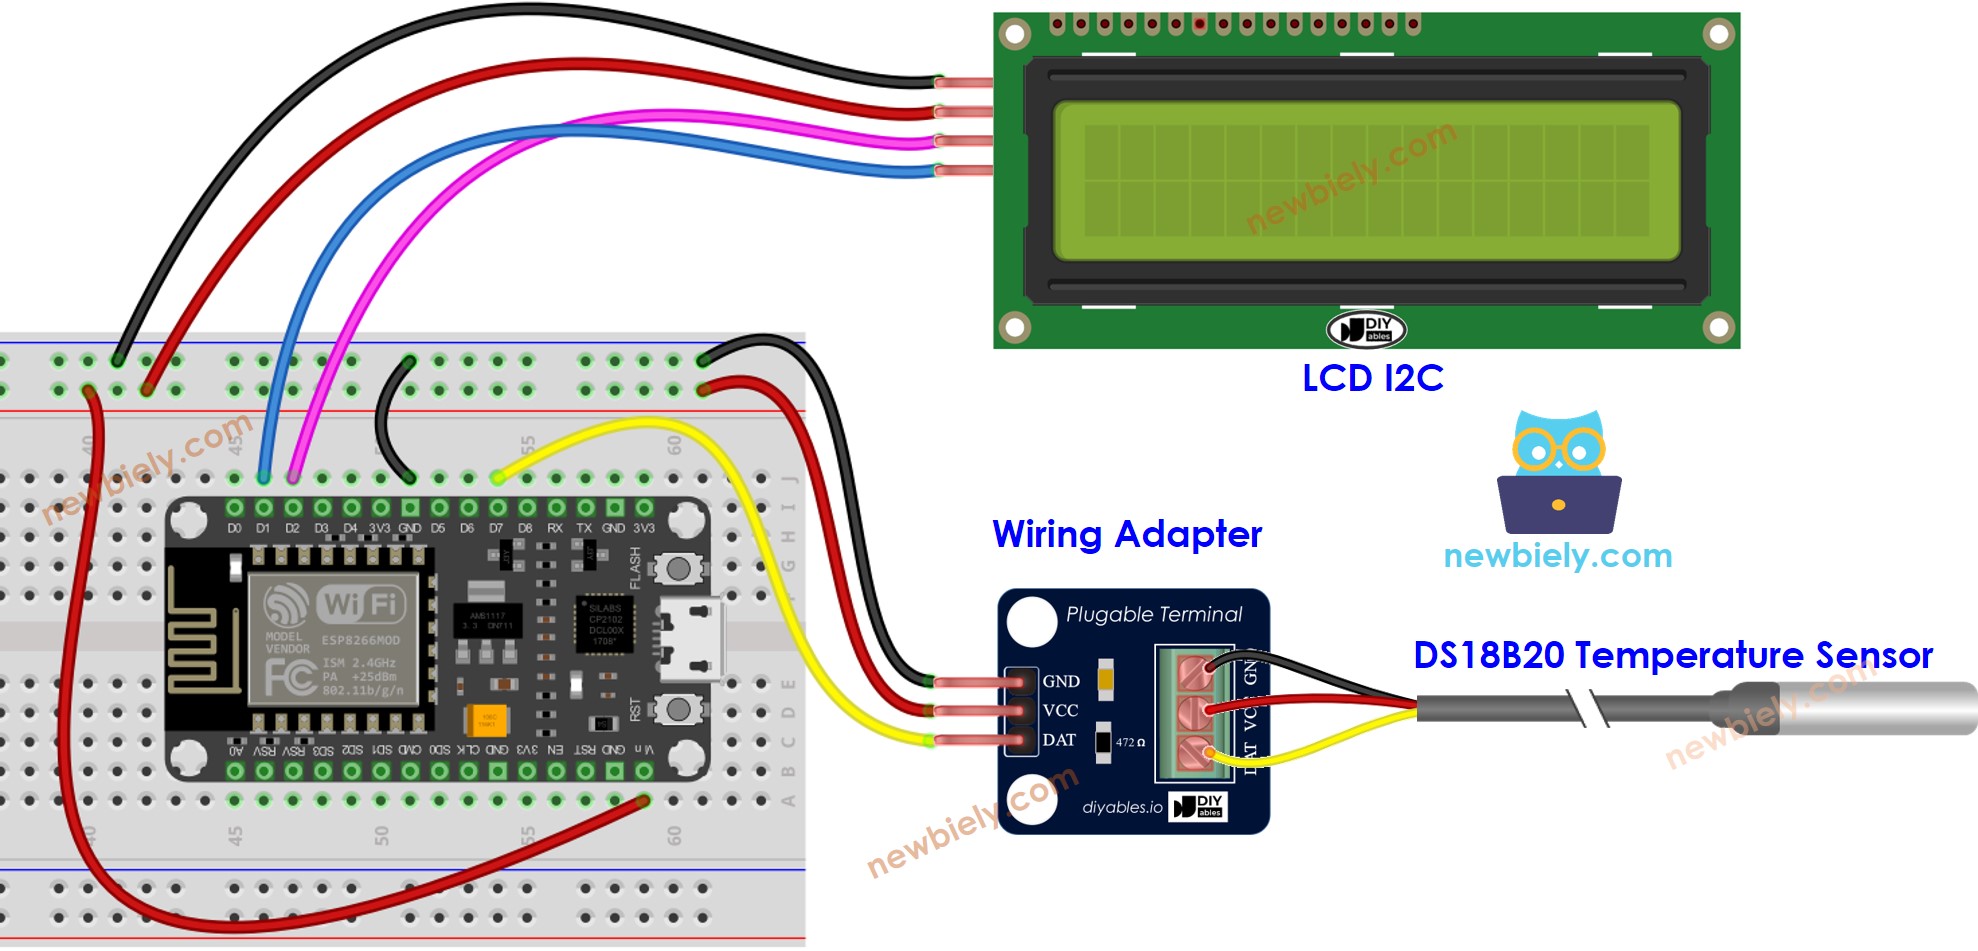 The wiring diagram between ESP8266 NodeMCU and Temperature Sensor LCD